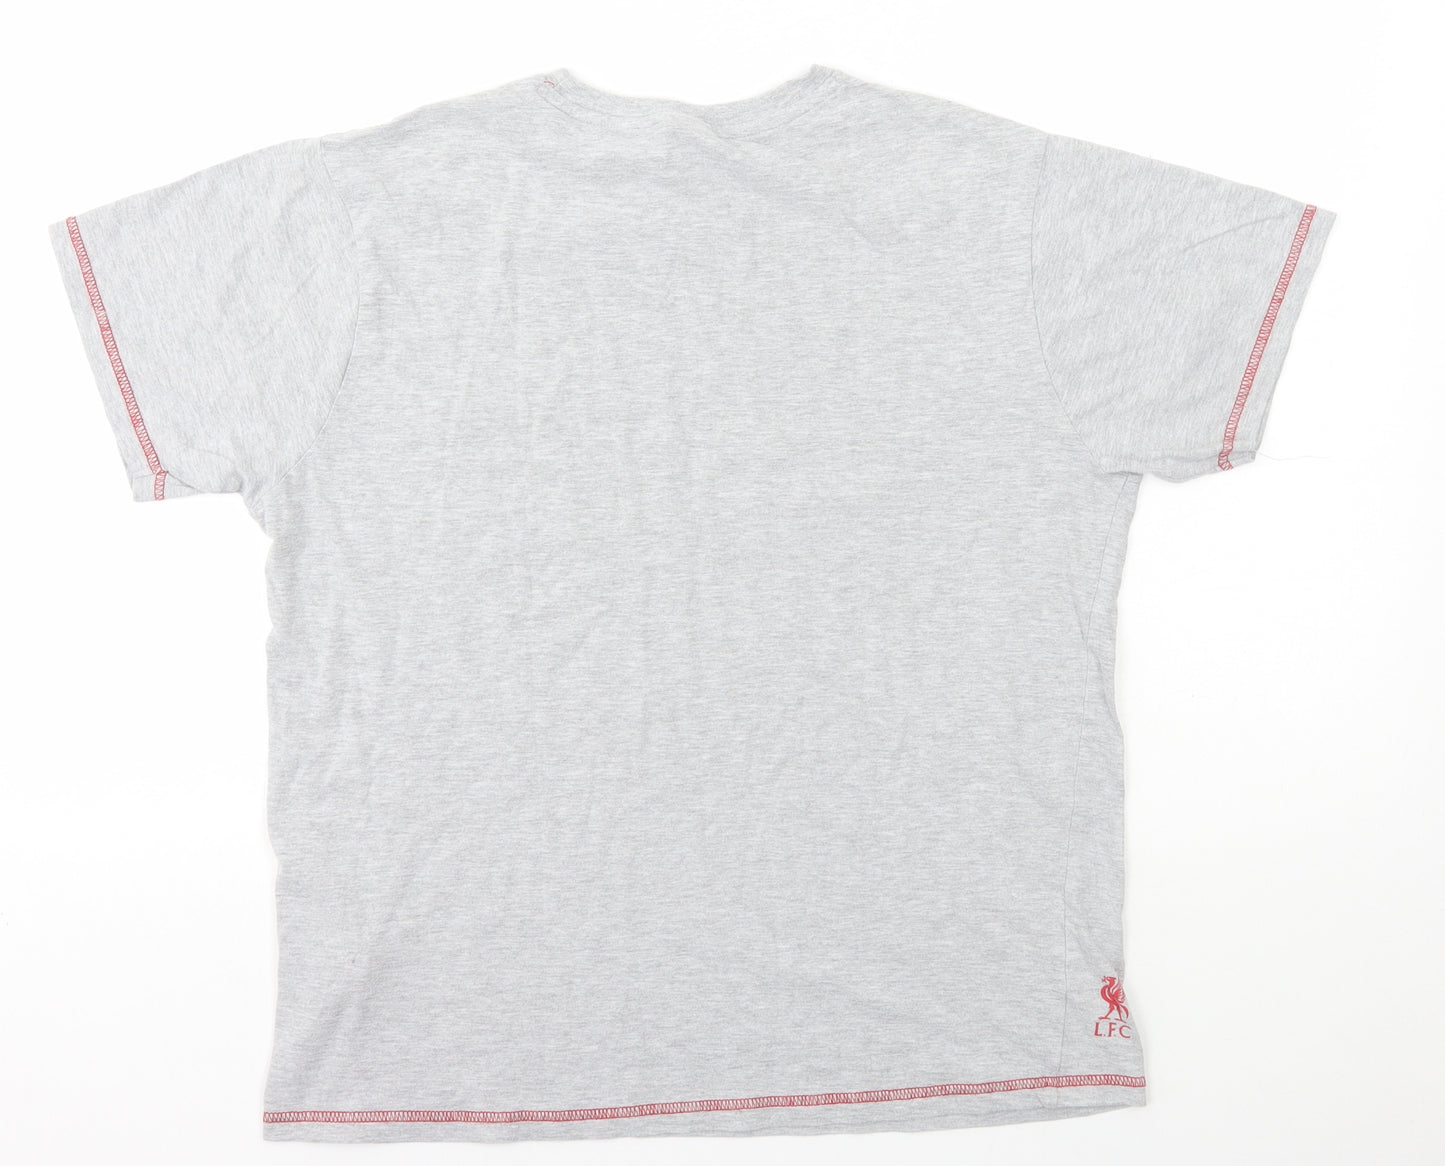 Liverpool FC Mens Grey Cotton T-Shirt Size M Round Neck - Stars